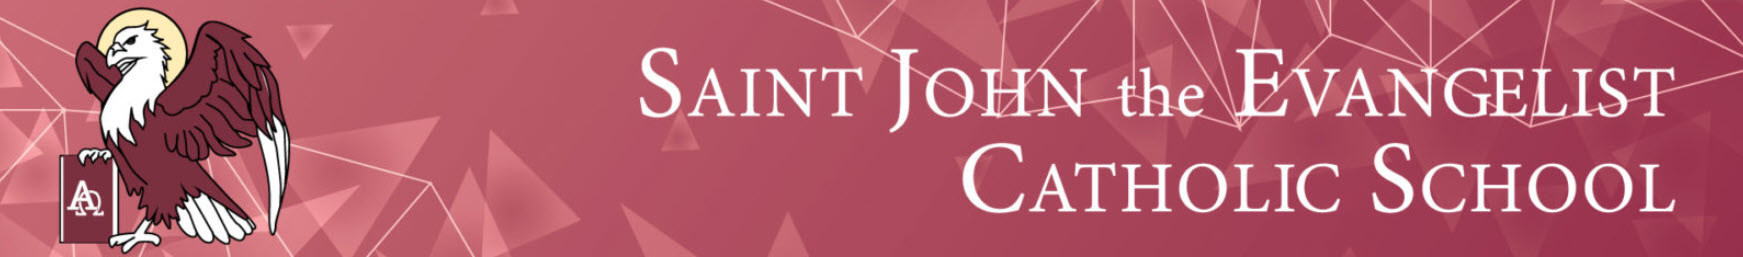 Saint John the Evangelist Catholic School